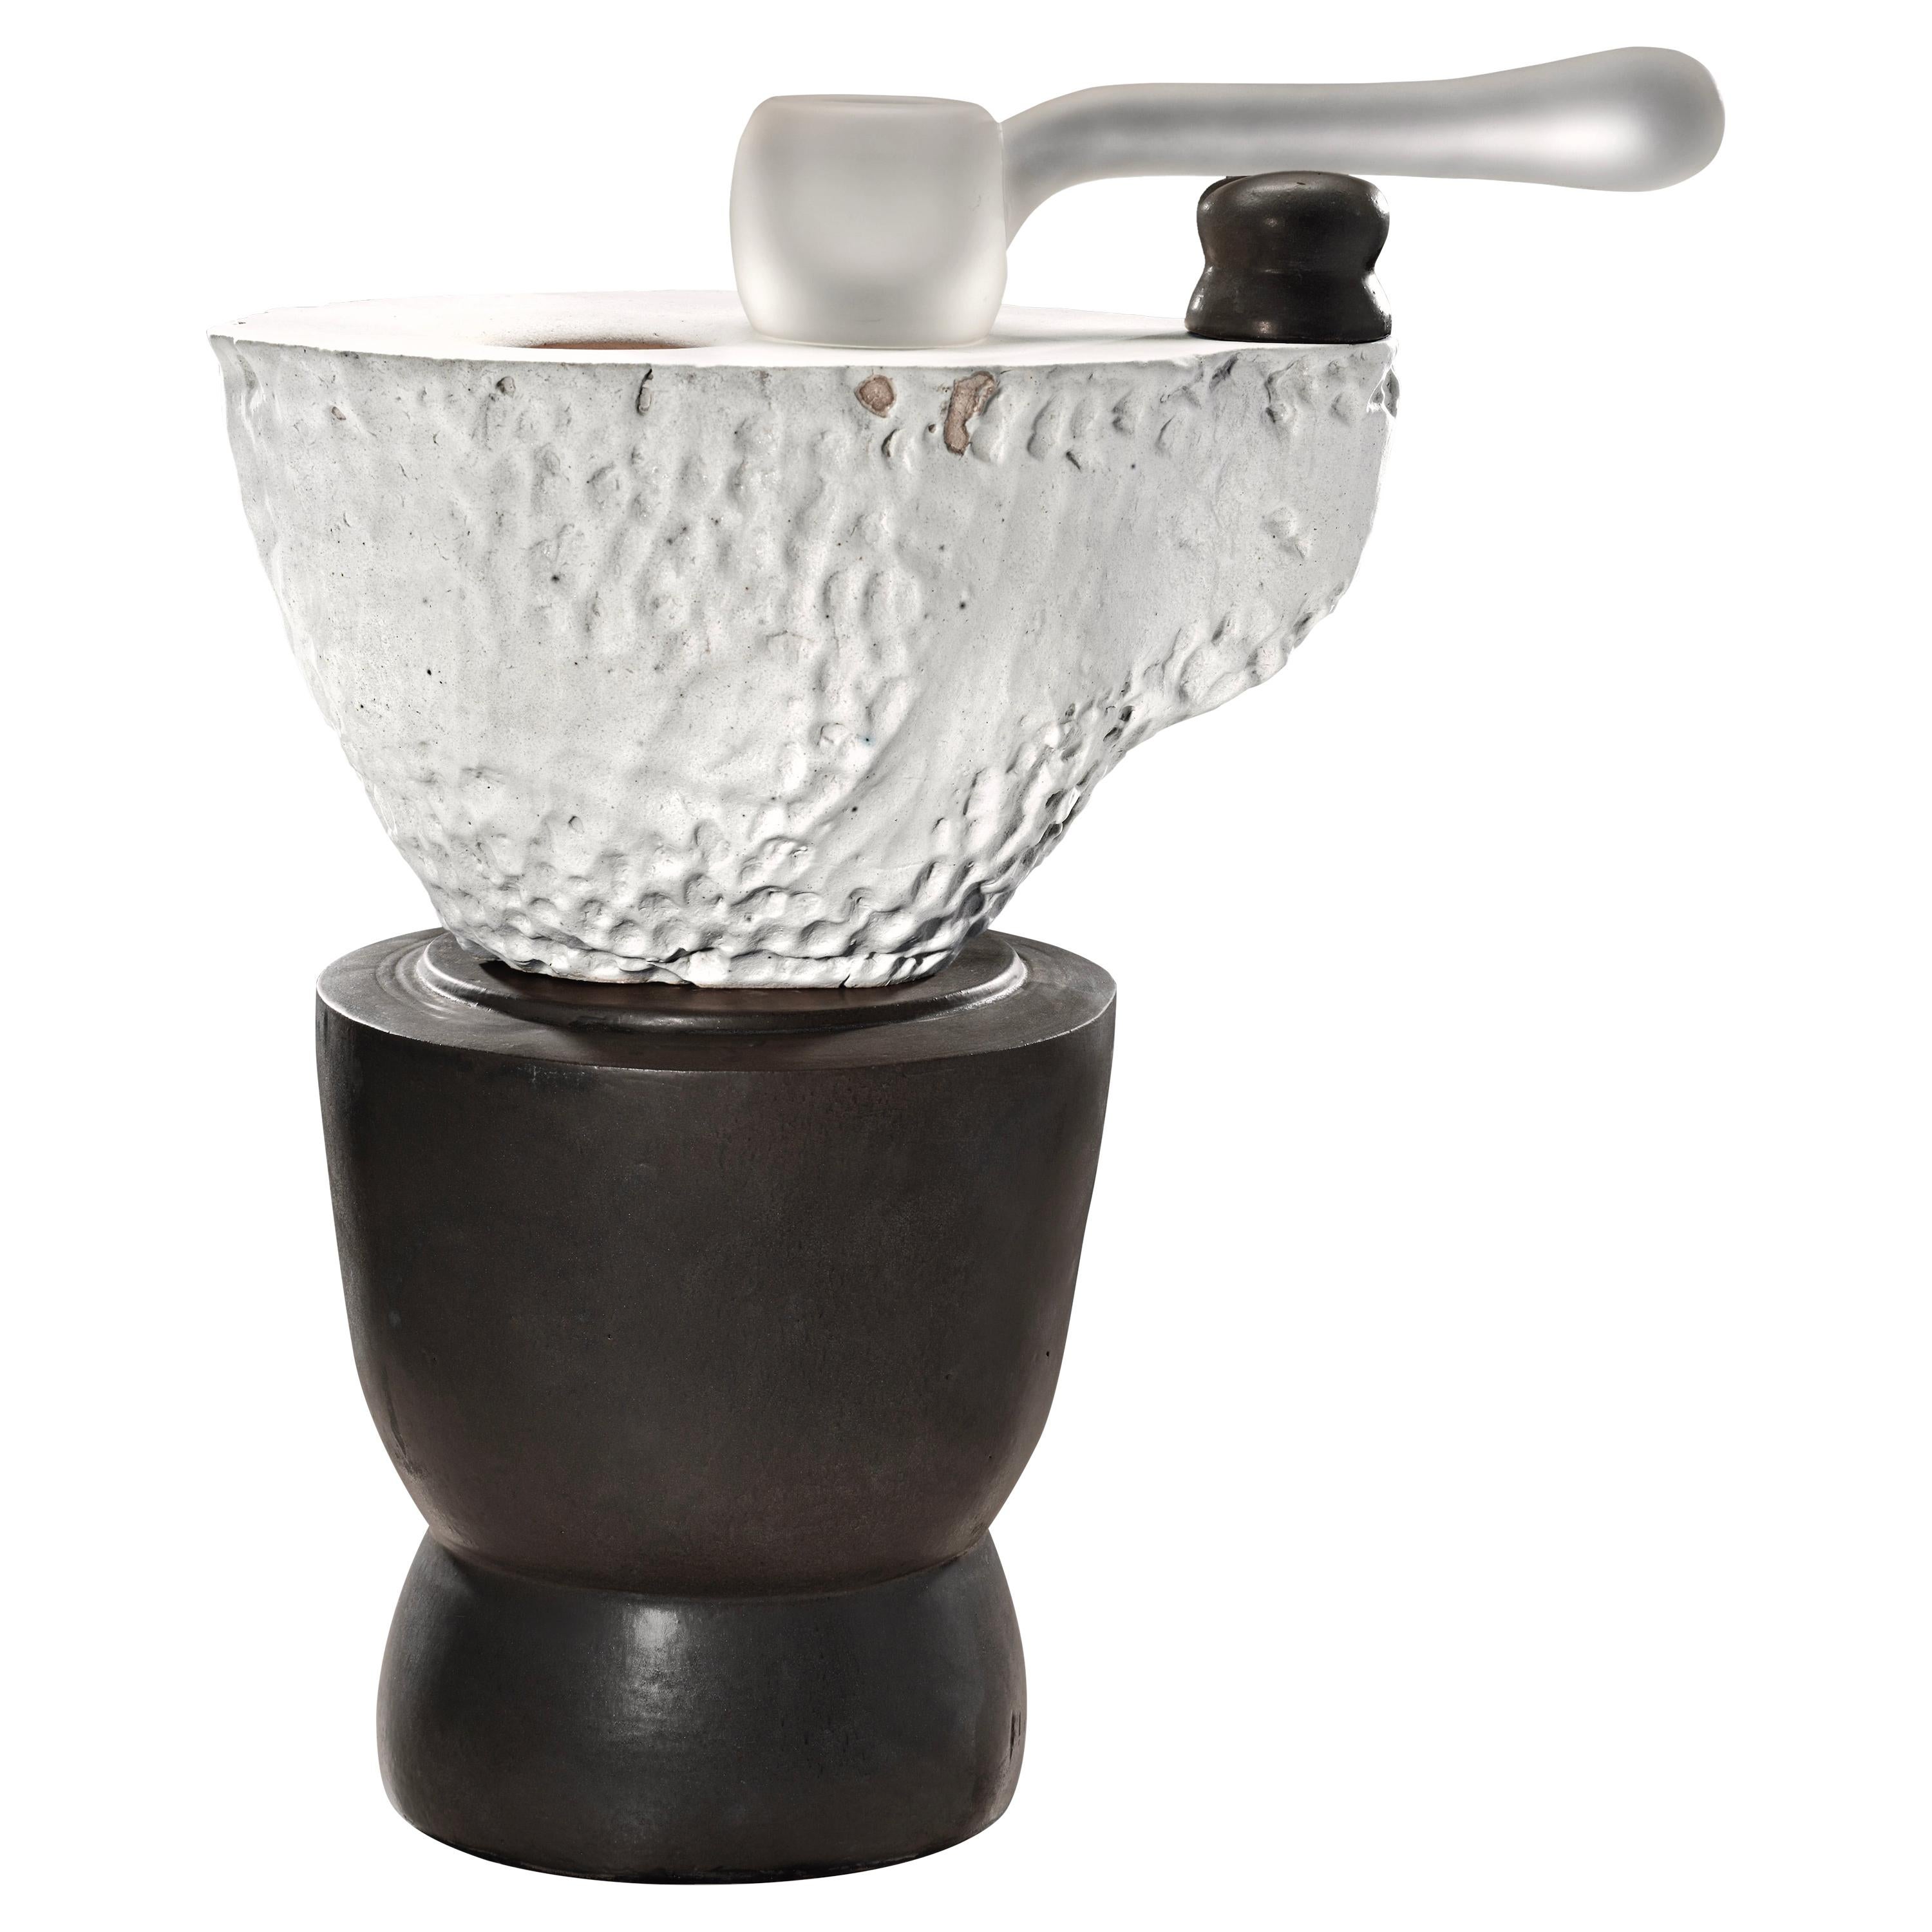 Richard Hirsch Ceramic Altar Bowl with Blown Glass Ladle Sculpture #3, 2020 For Sale